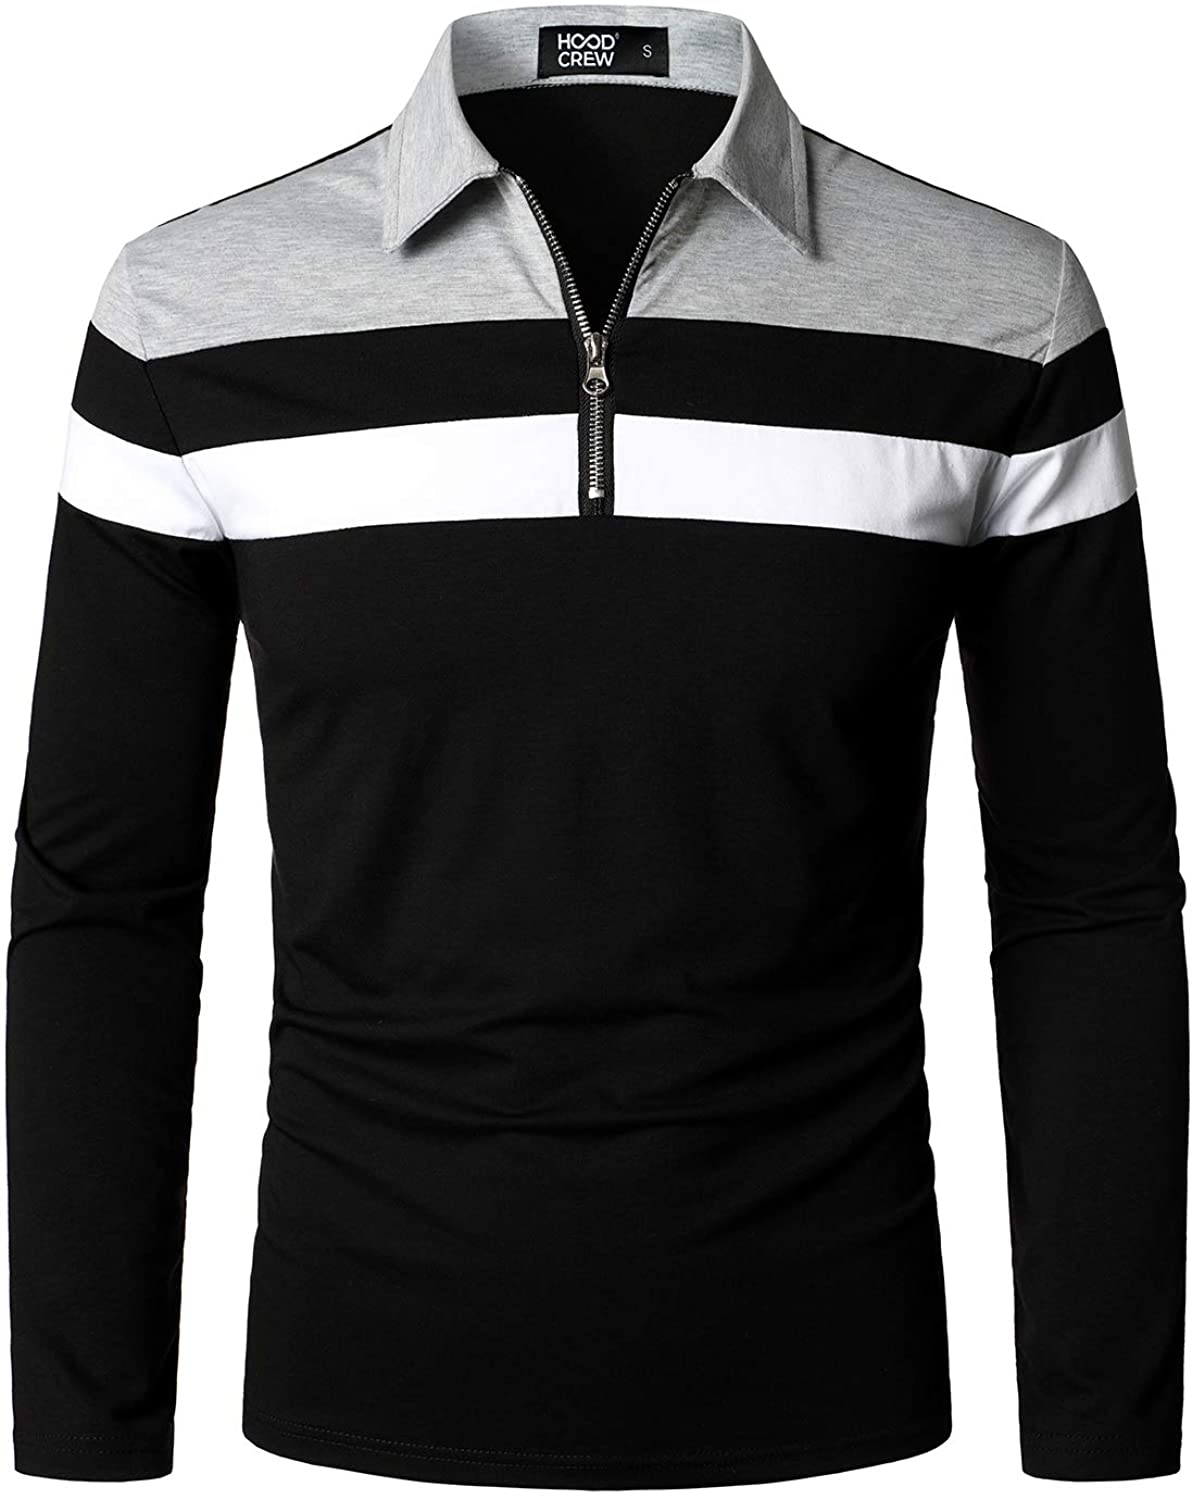 HOOD CREW Men's Long Sleeve Polo Shirt Casual Slim Shirts Contrast Color Pat